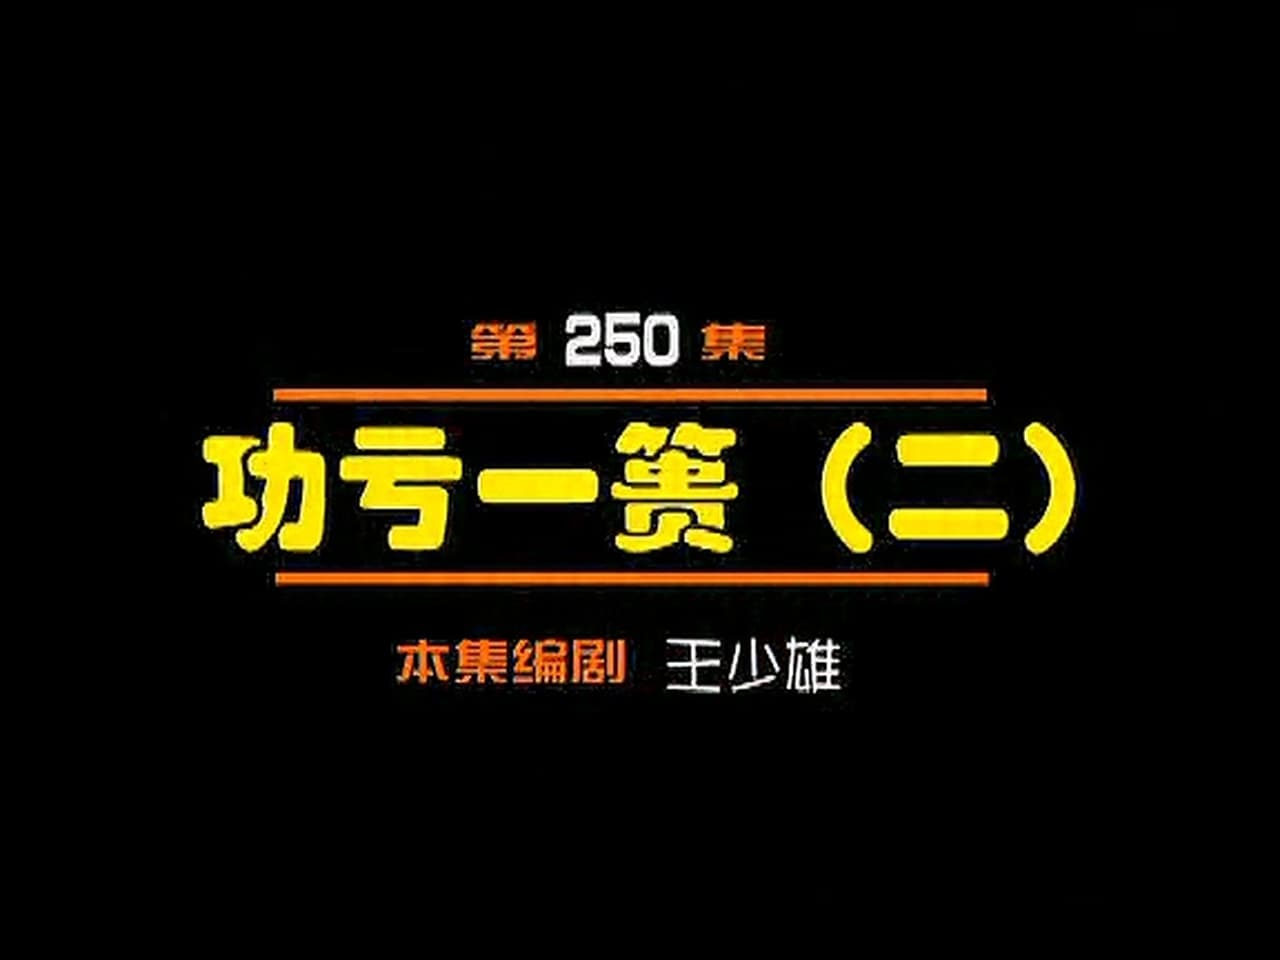 Episode 250